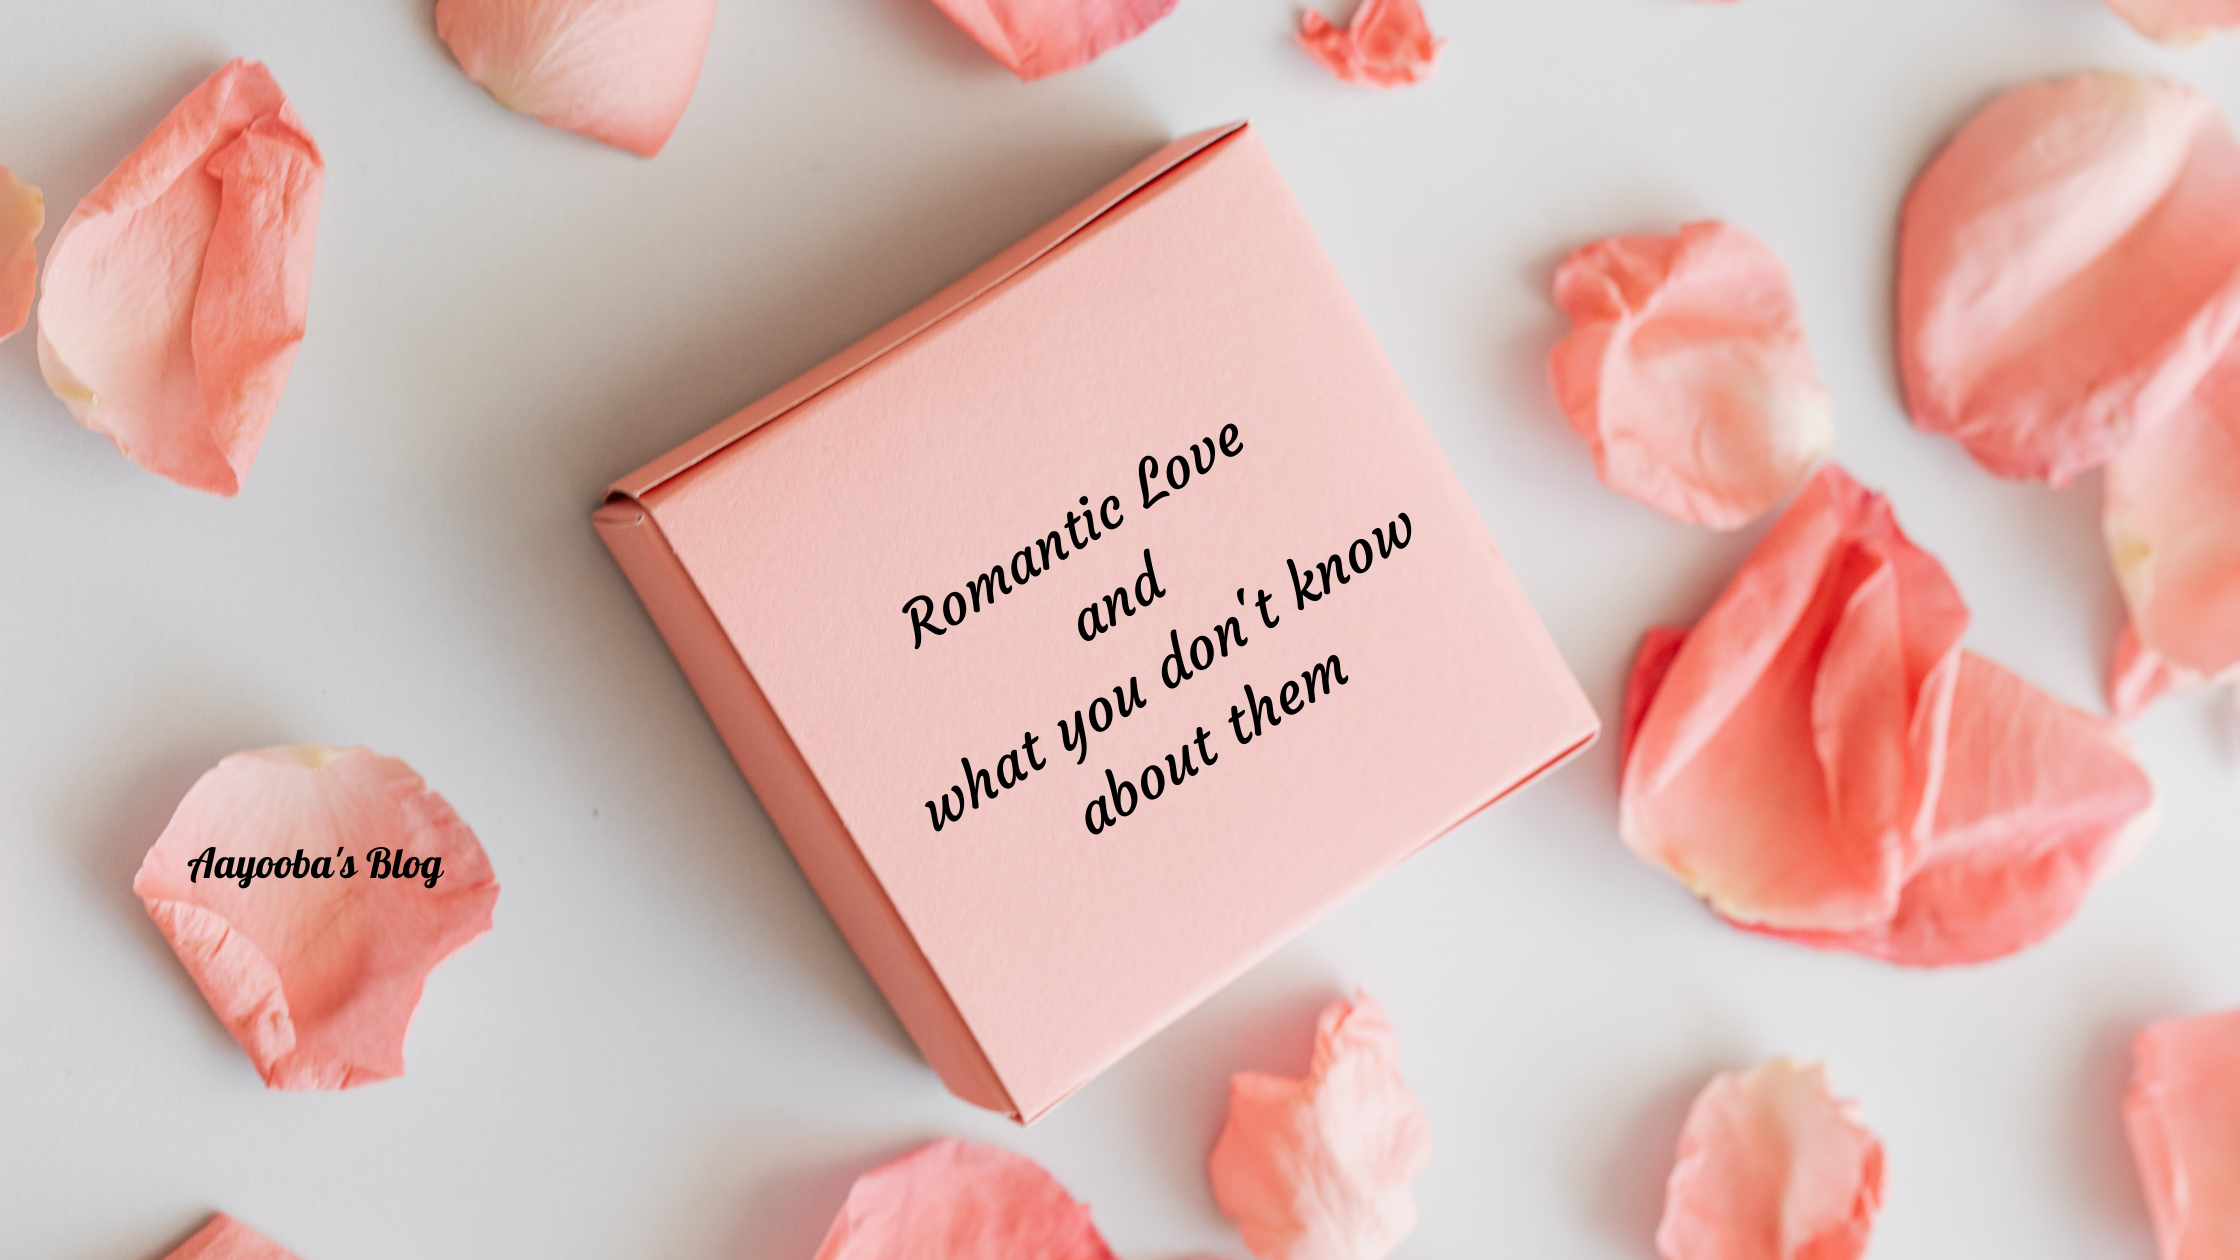 blog banner aayooba's blog romantic love